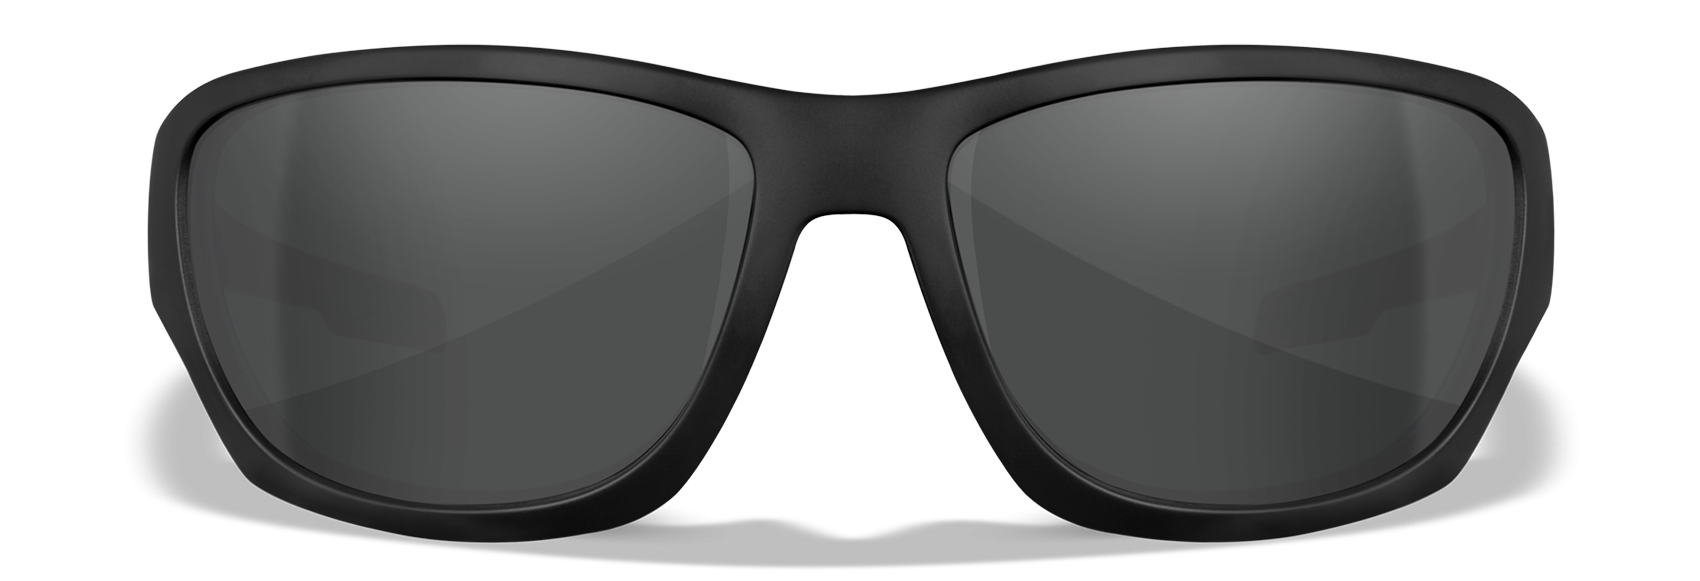 Wiley X WX Climb Matte Black Polycarbonate Sunglasses